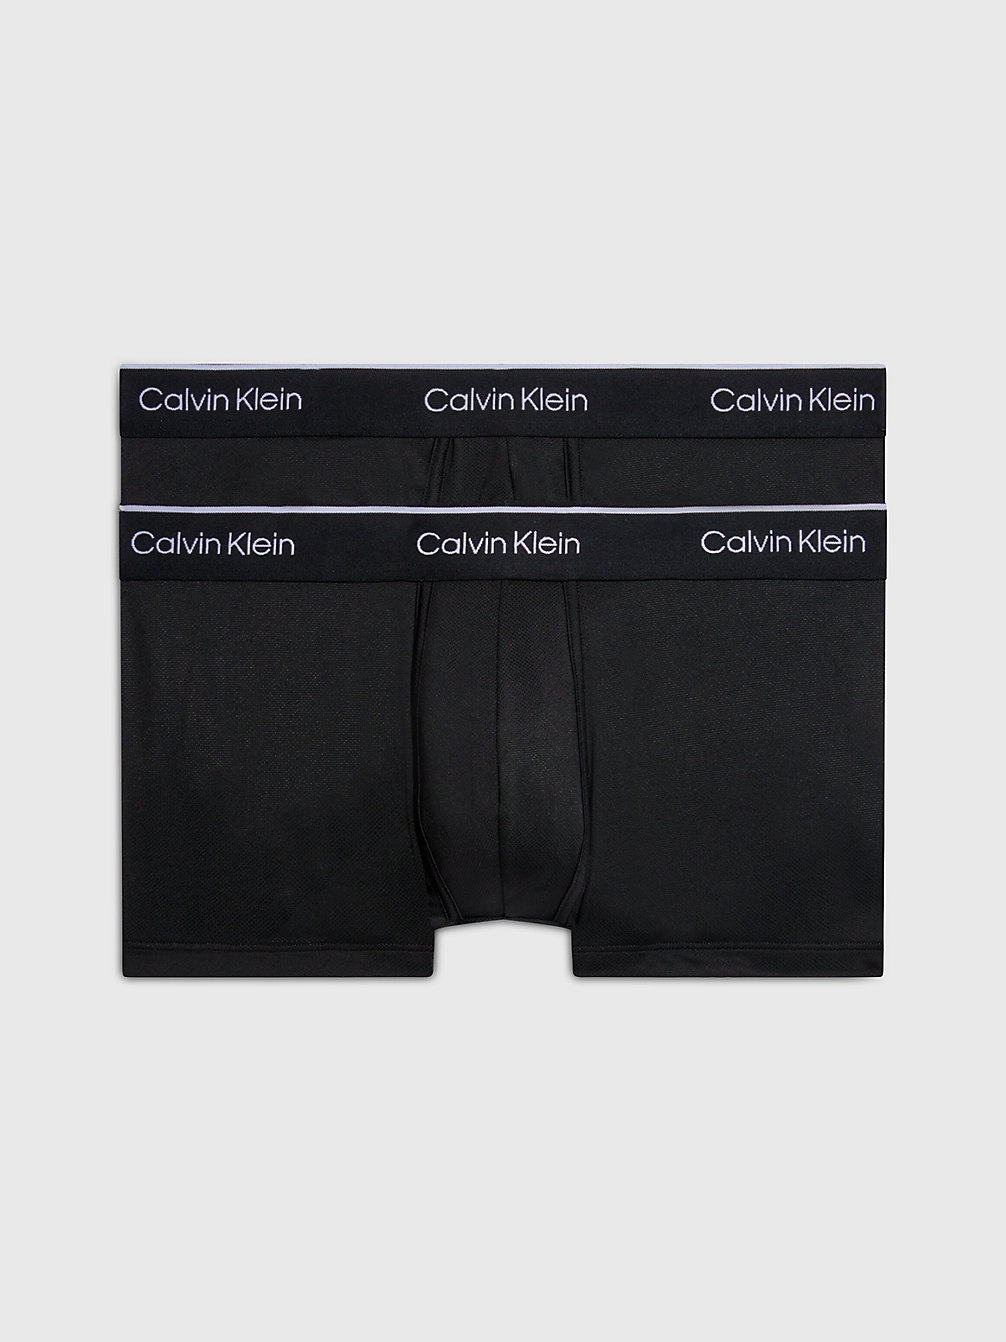 BLACK/BLACK > Комплект боксеров низкой посадки 2 шт. - CK Pro Air > undefined женщины - Calvin Klein